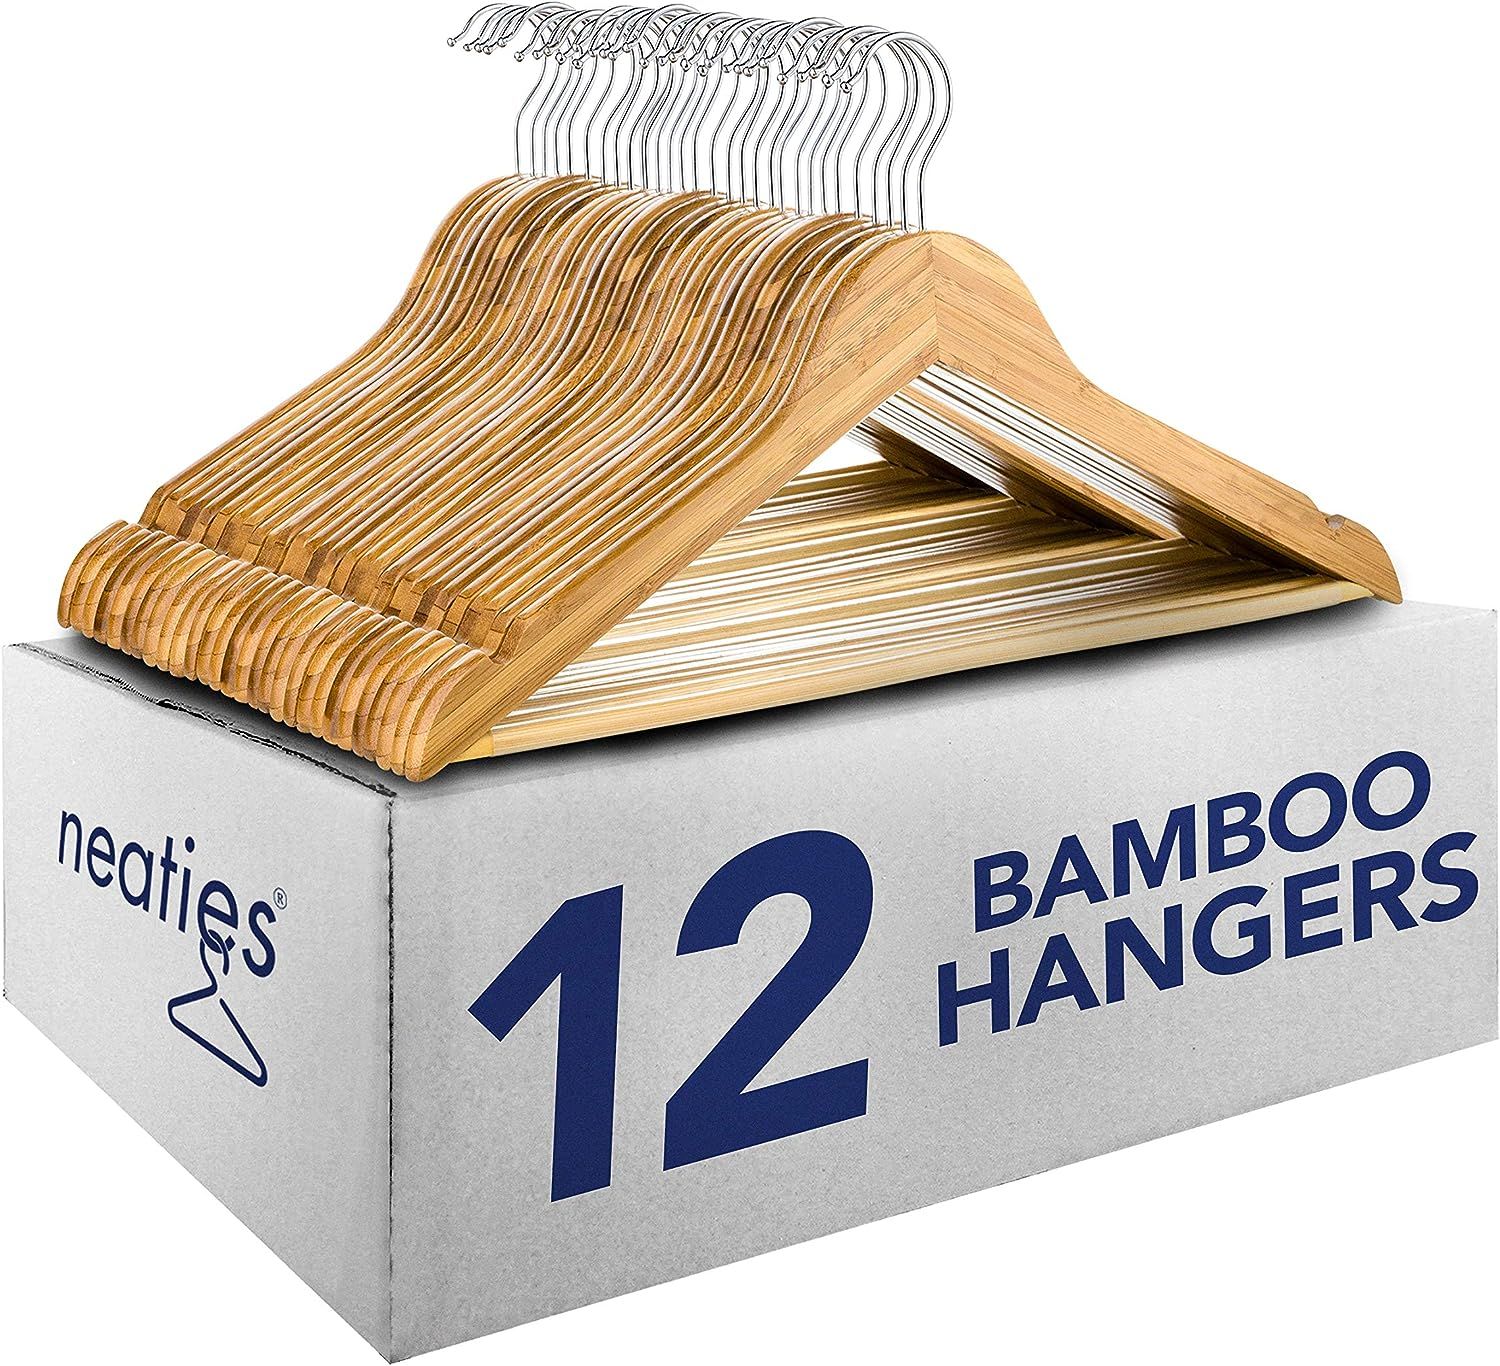 Neaties Eco-Friendly Bamboo Wood Hangers Natural Finish, 12pk | Amazon (US)